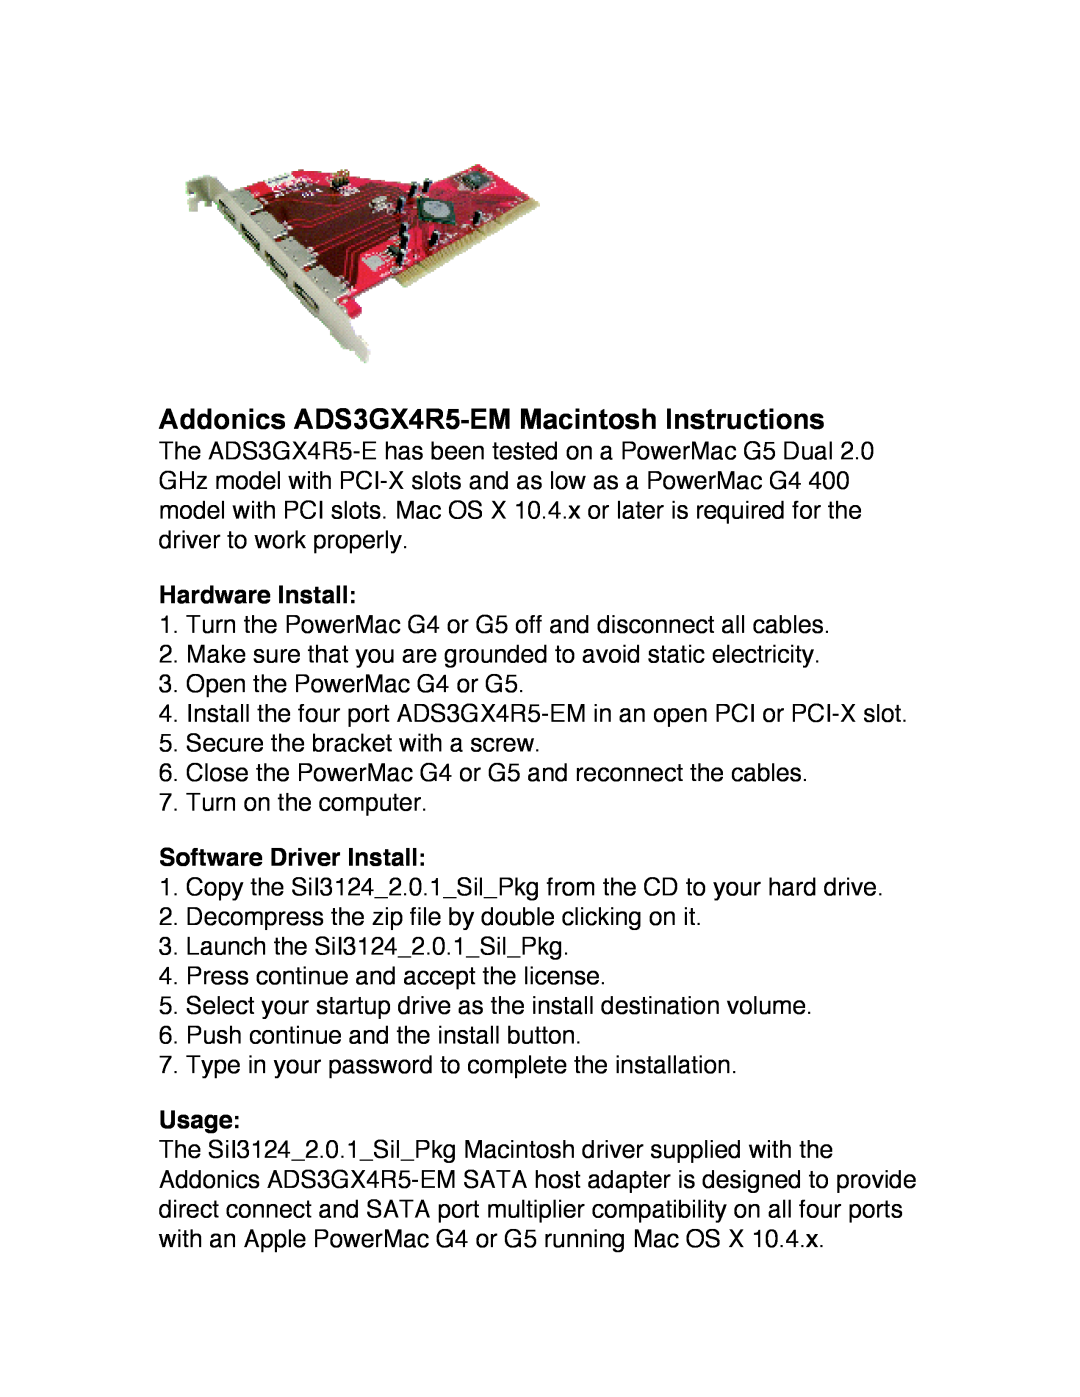 Addonics Technologies ADS3GX4R5-EM manual Hardware Install, Software Driver Install, Usage 